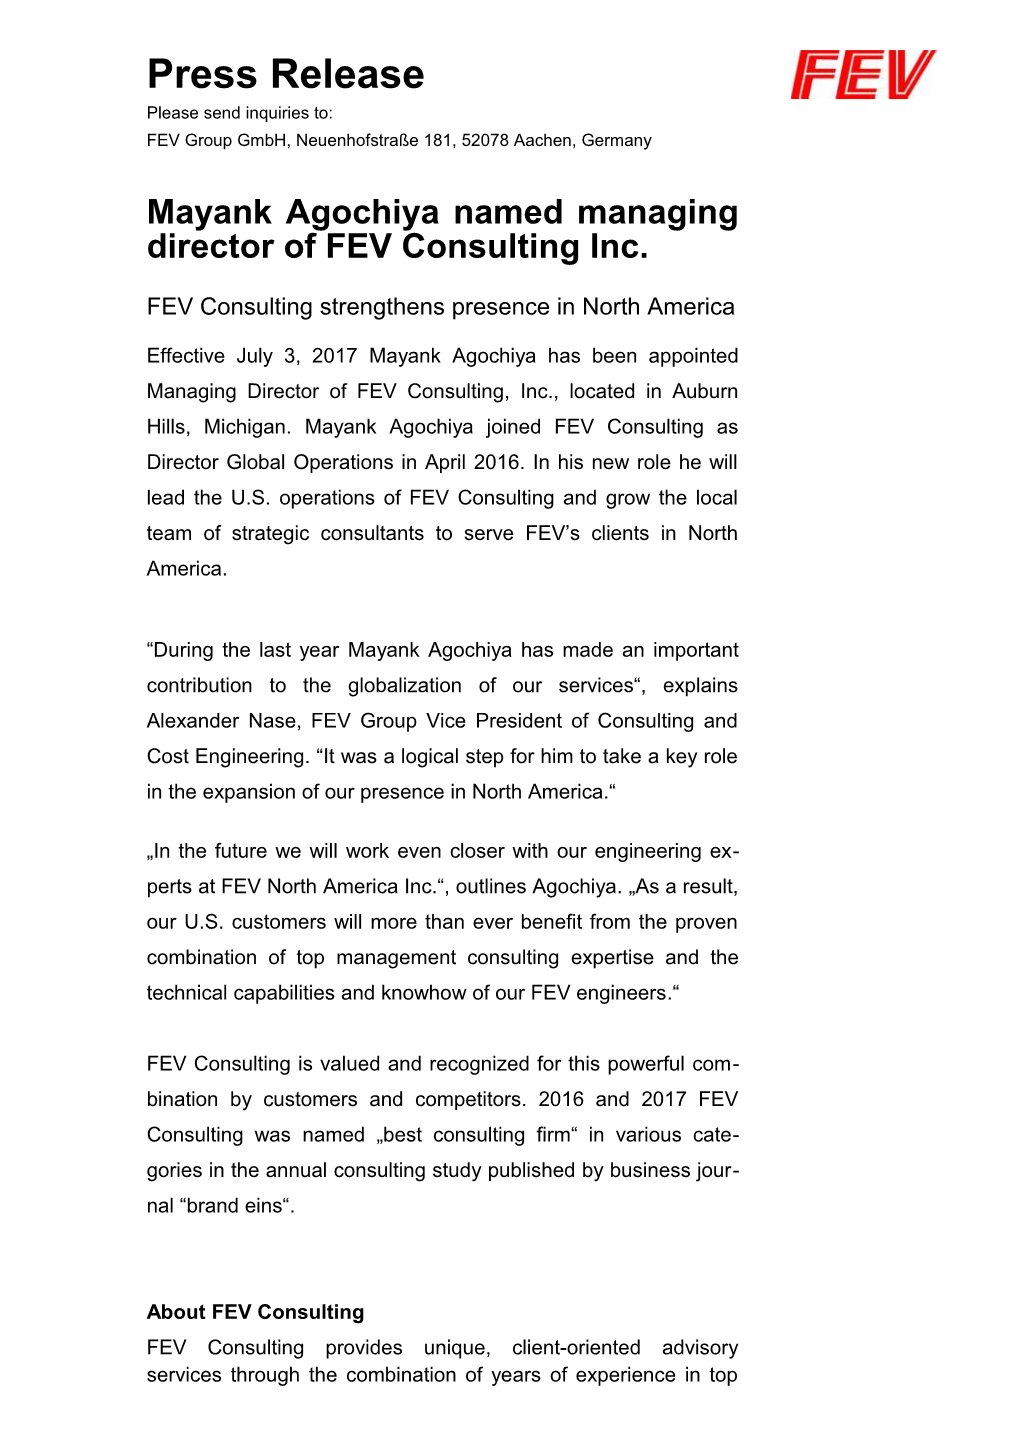 Mayank Agochiya Named Managing Director of FEV Consulting Inc